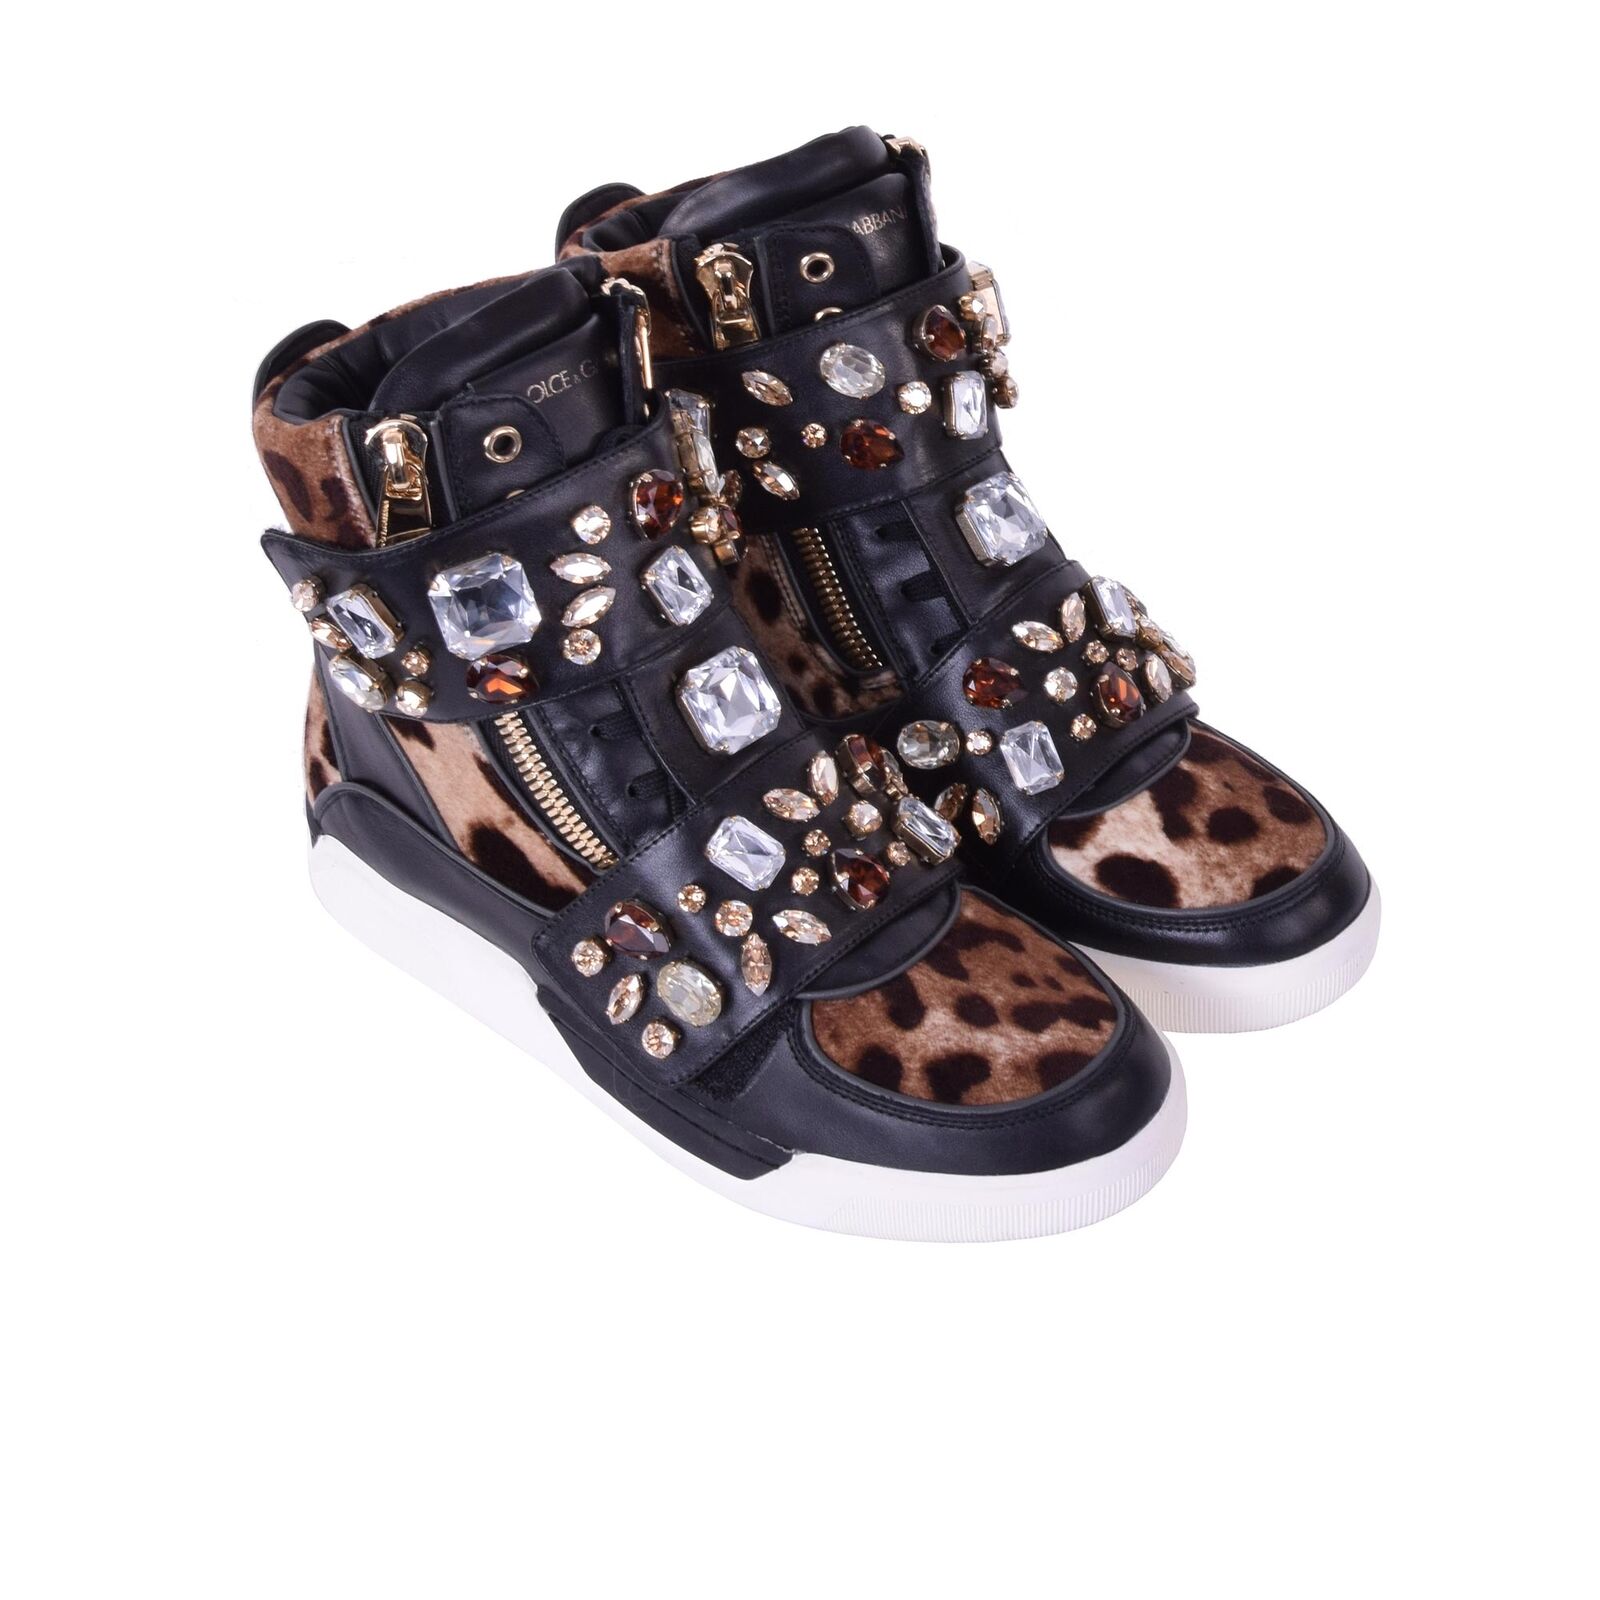 DOLCE & GABBANA Crystals Leopard High-Top Zip Sneakers Shoes Black 05875 |  eBay